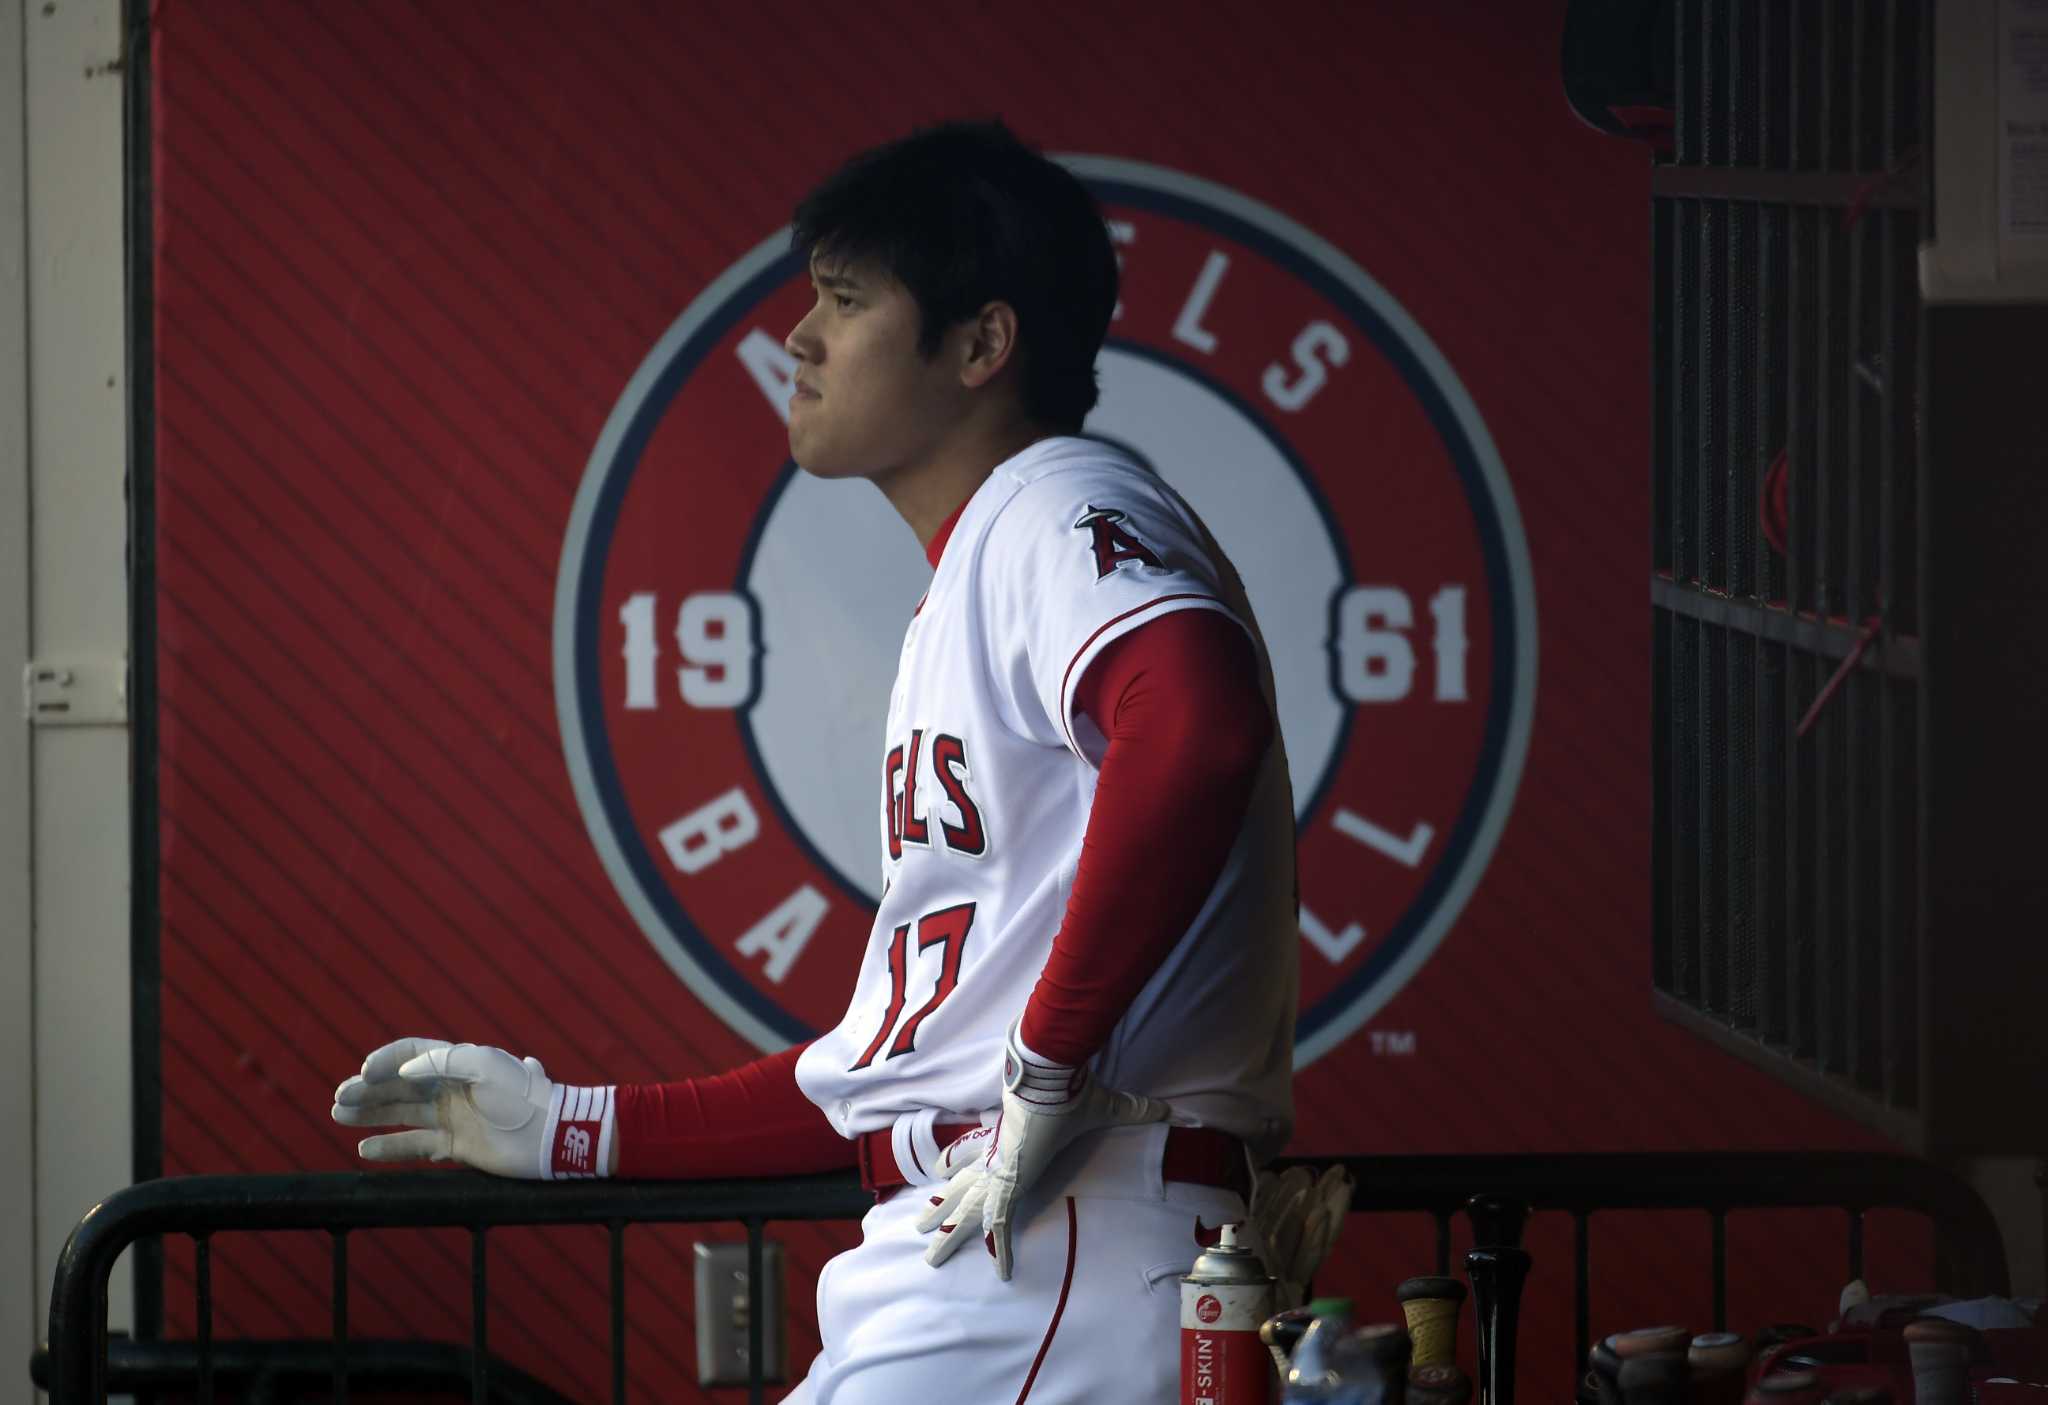 Prized baseball star Shohei Ohtani might not even be aware